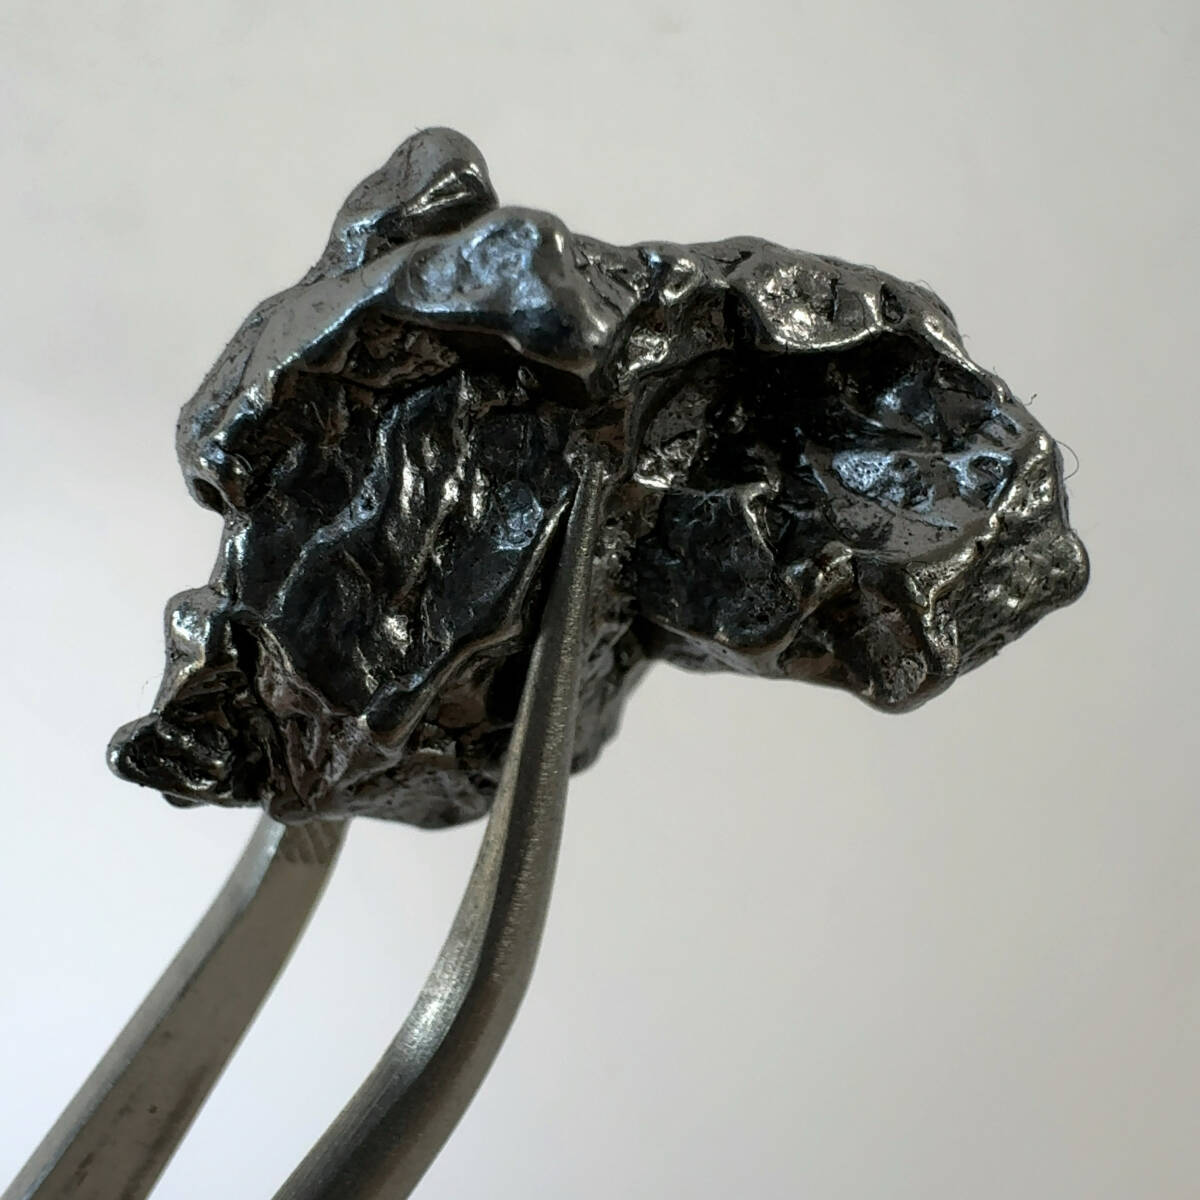 【E24607】 カンポ・デル・シエロ隕石 隕石 隕鉄 メテオライト 天然石 パワーストーン カンポ